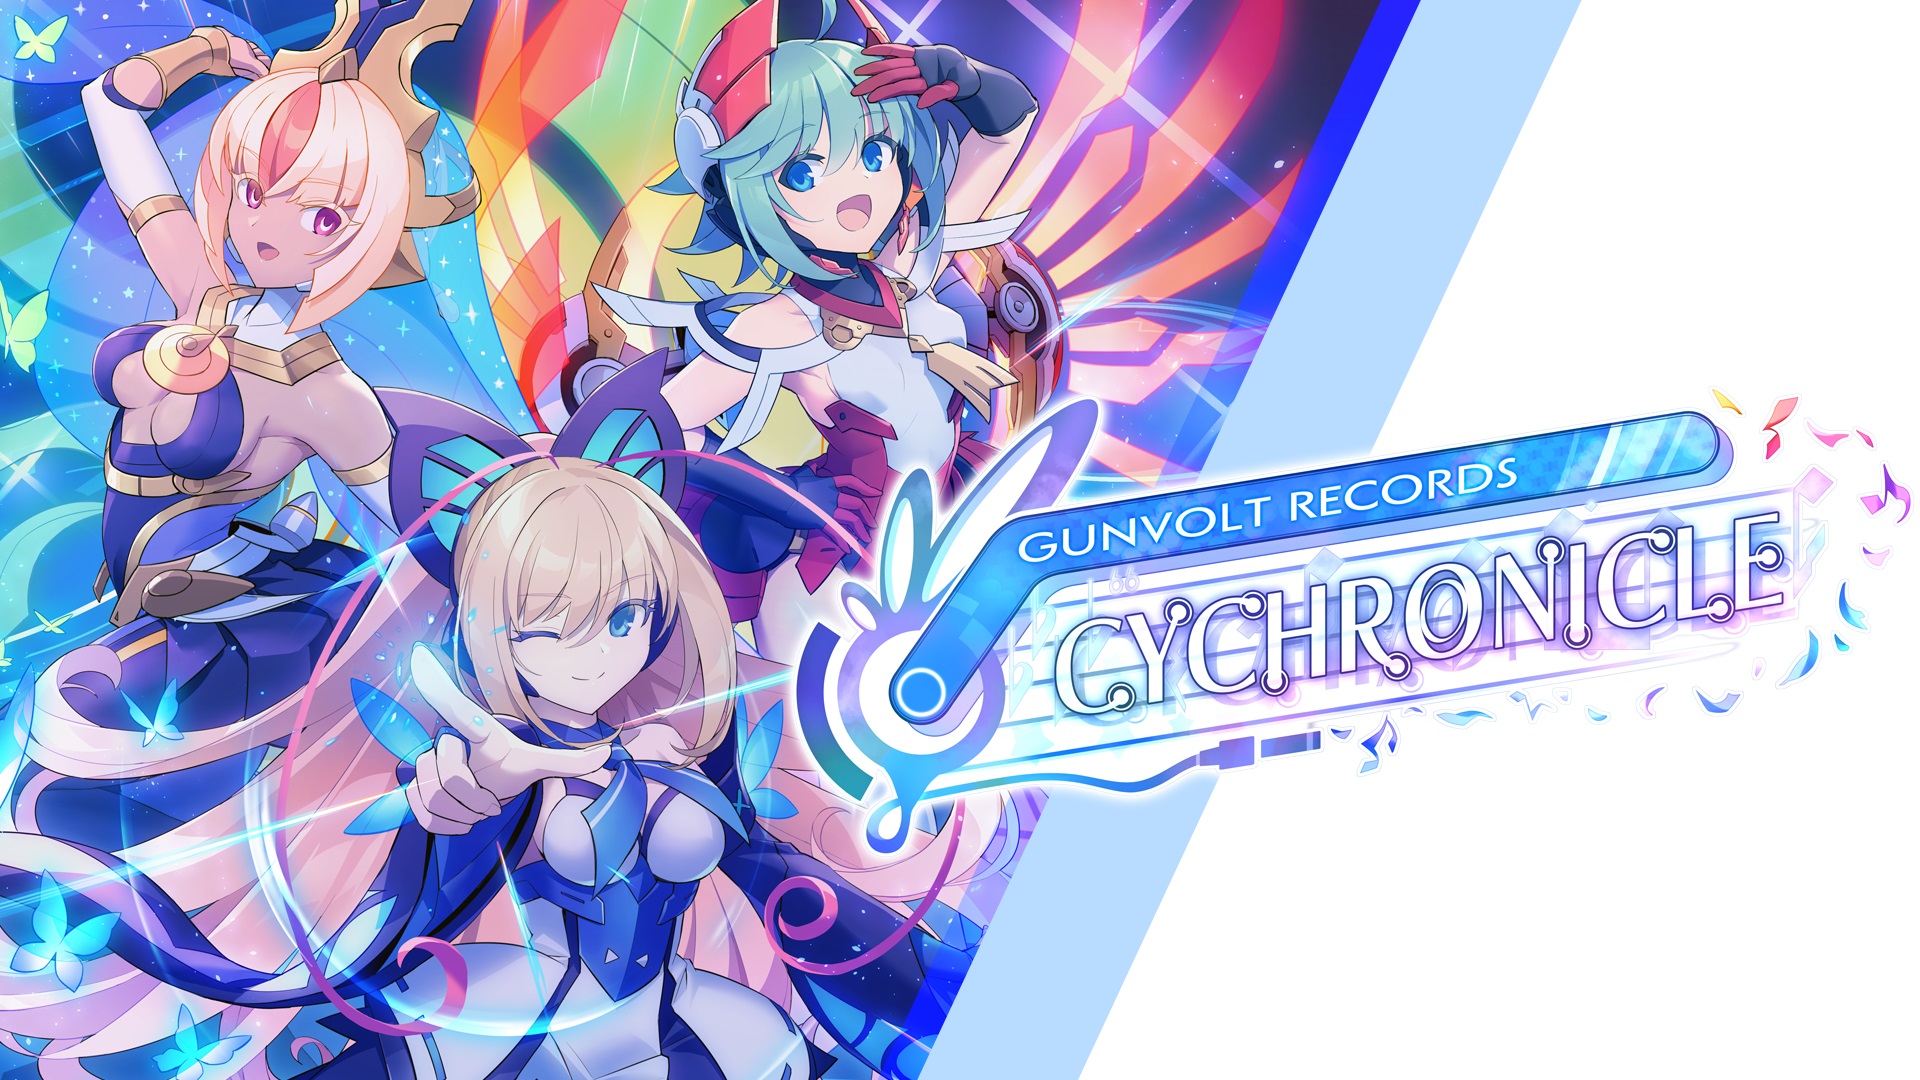 Rhythm spinoff game Gunvolt Records Cychronicle announced